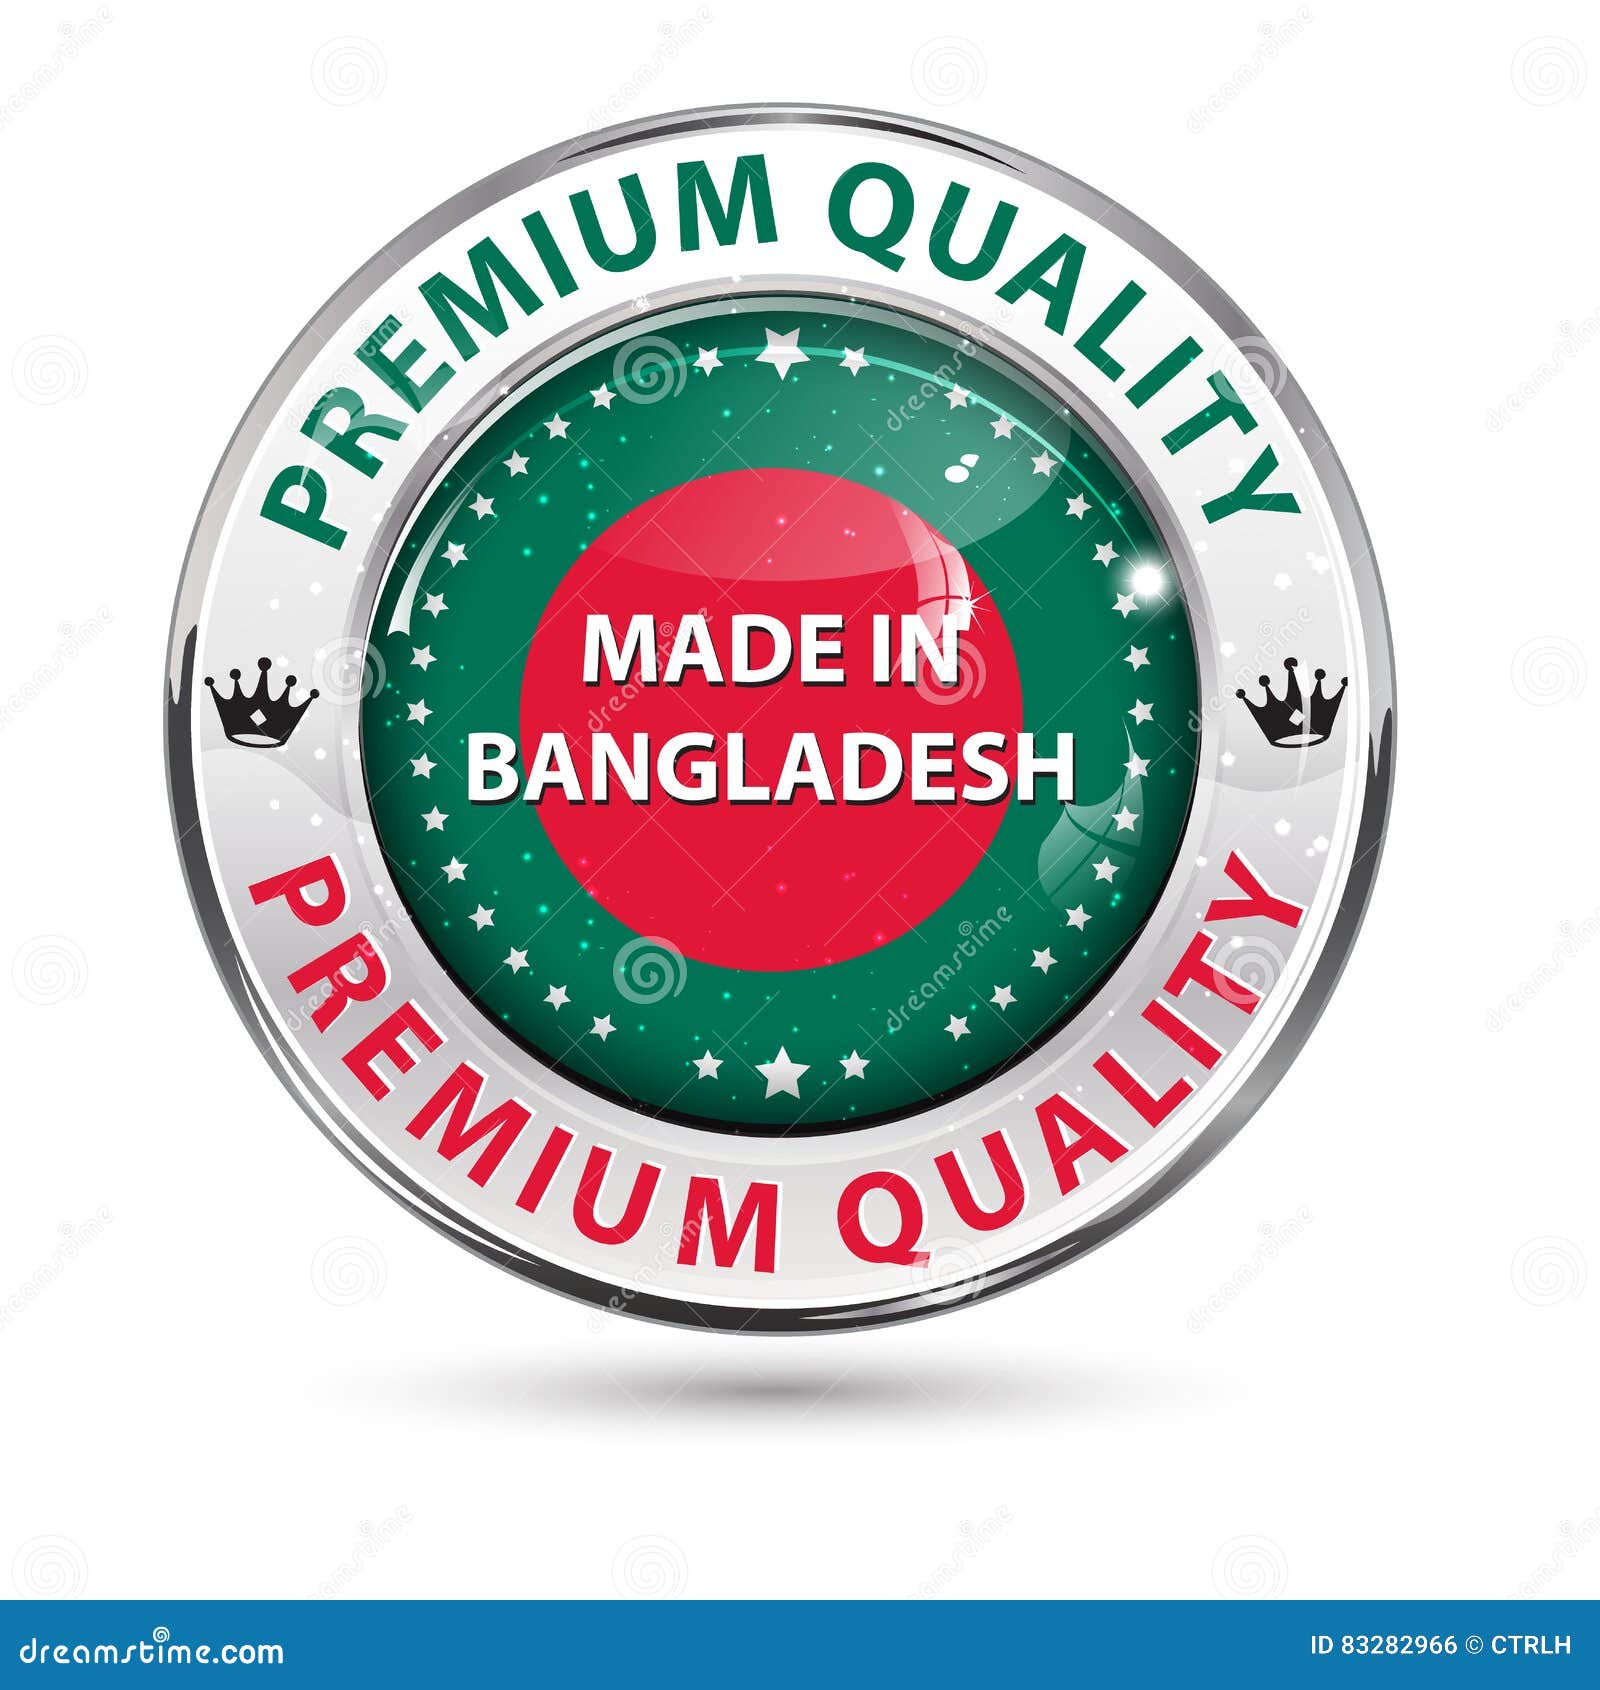 Made in bangladesh